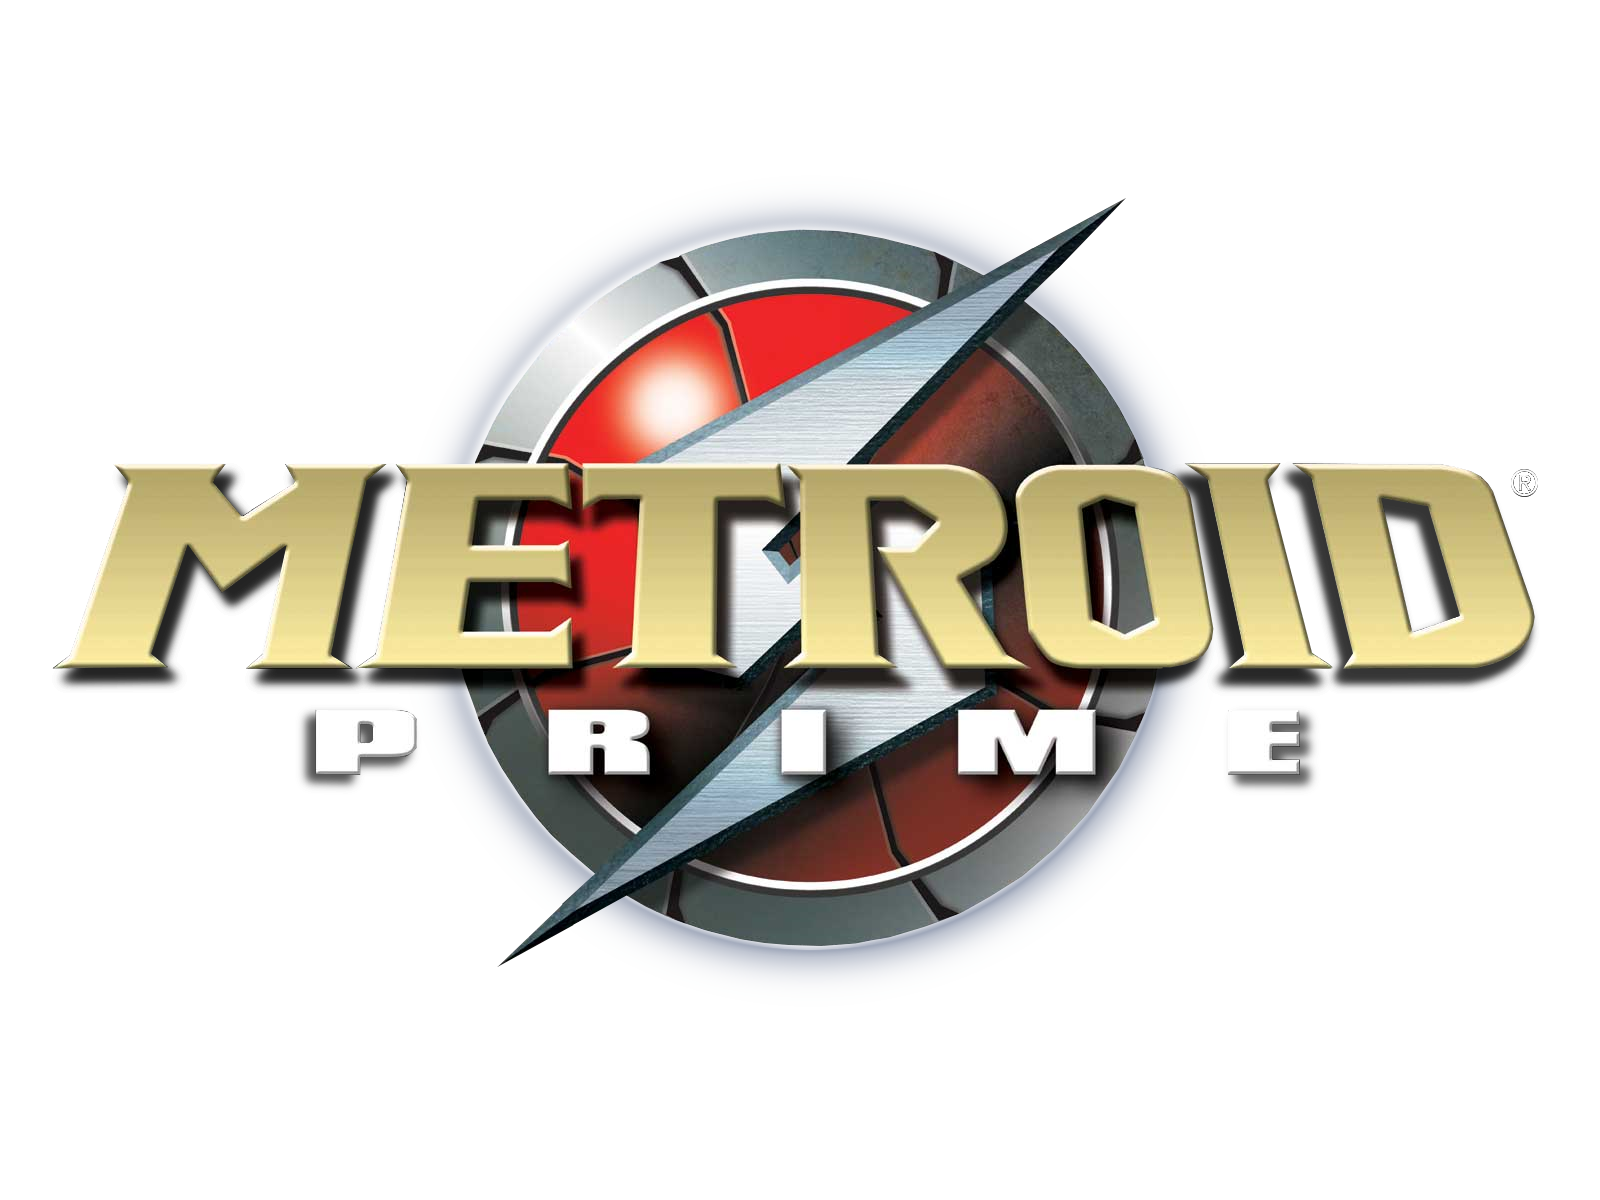 download new metroid prime